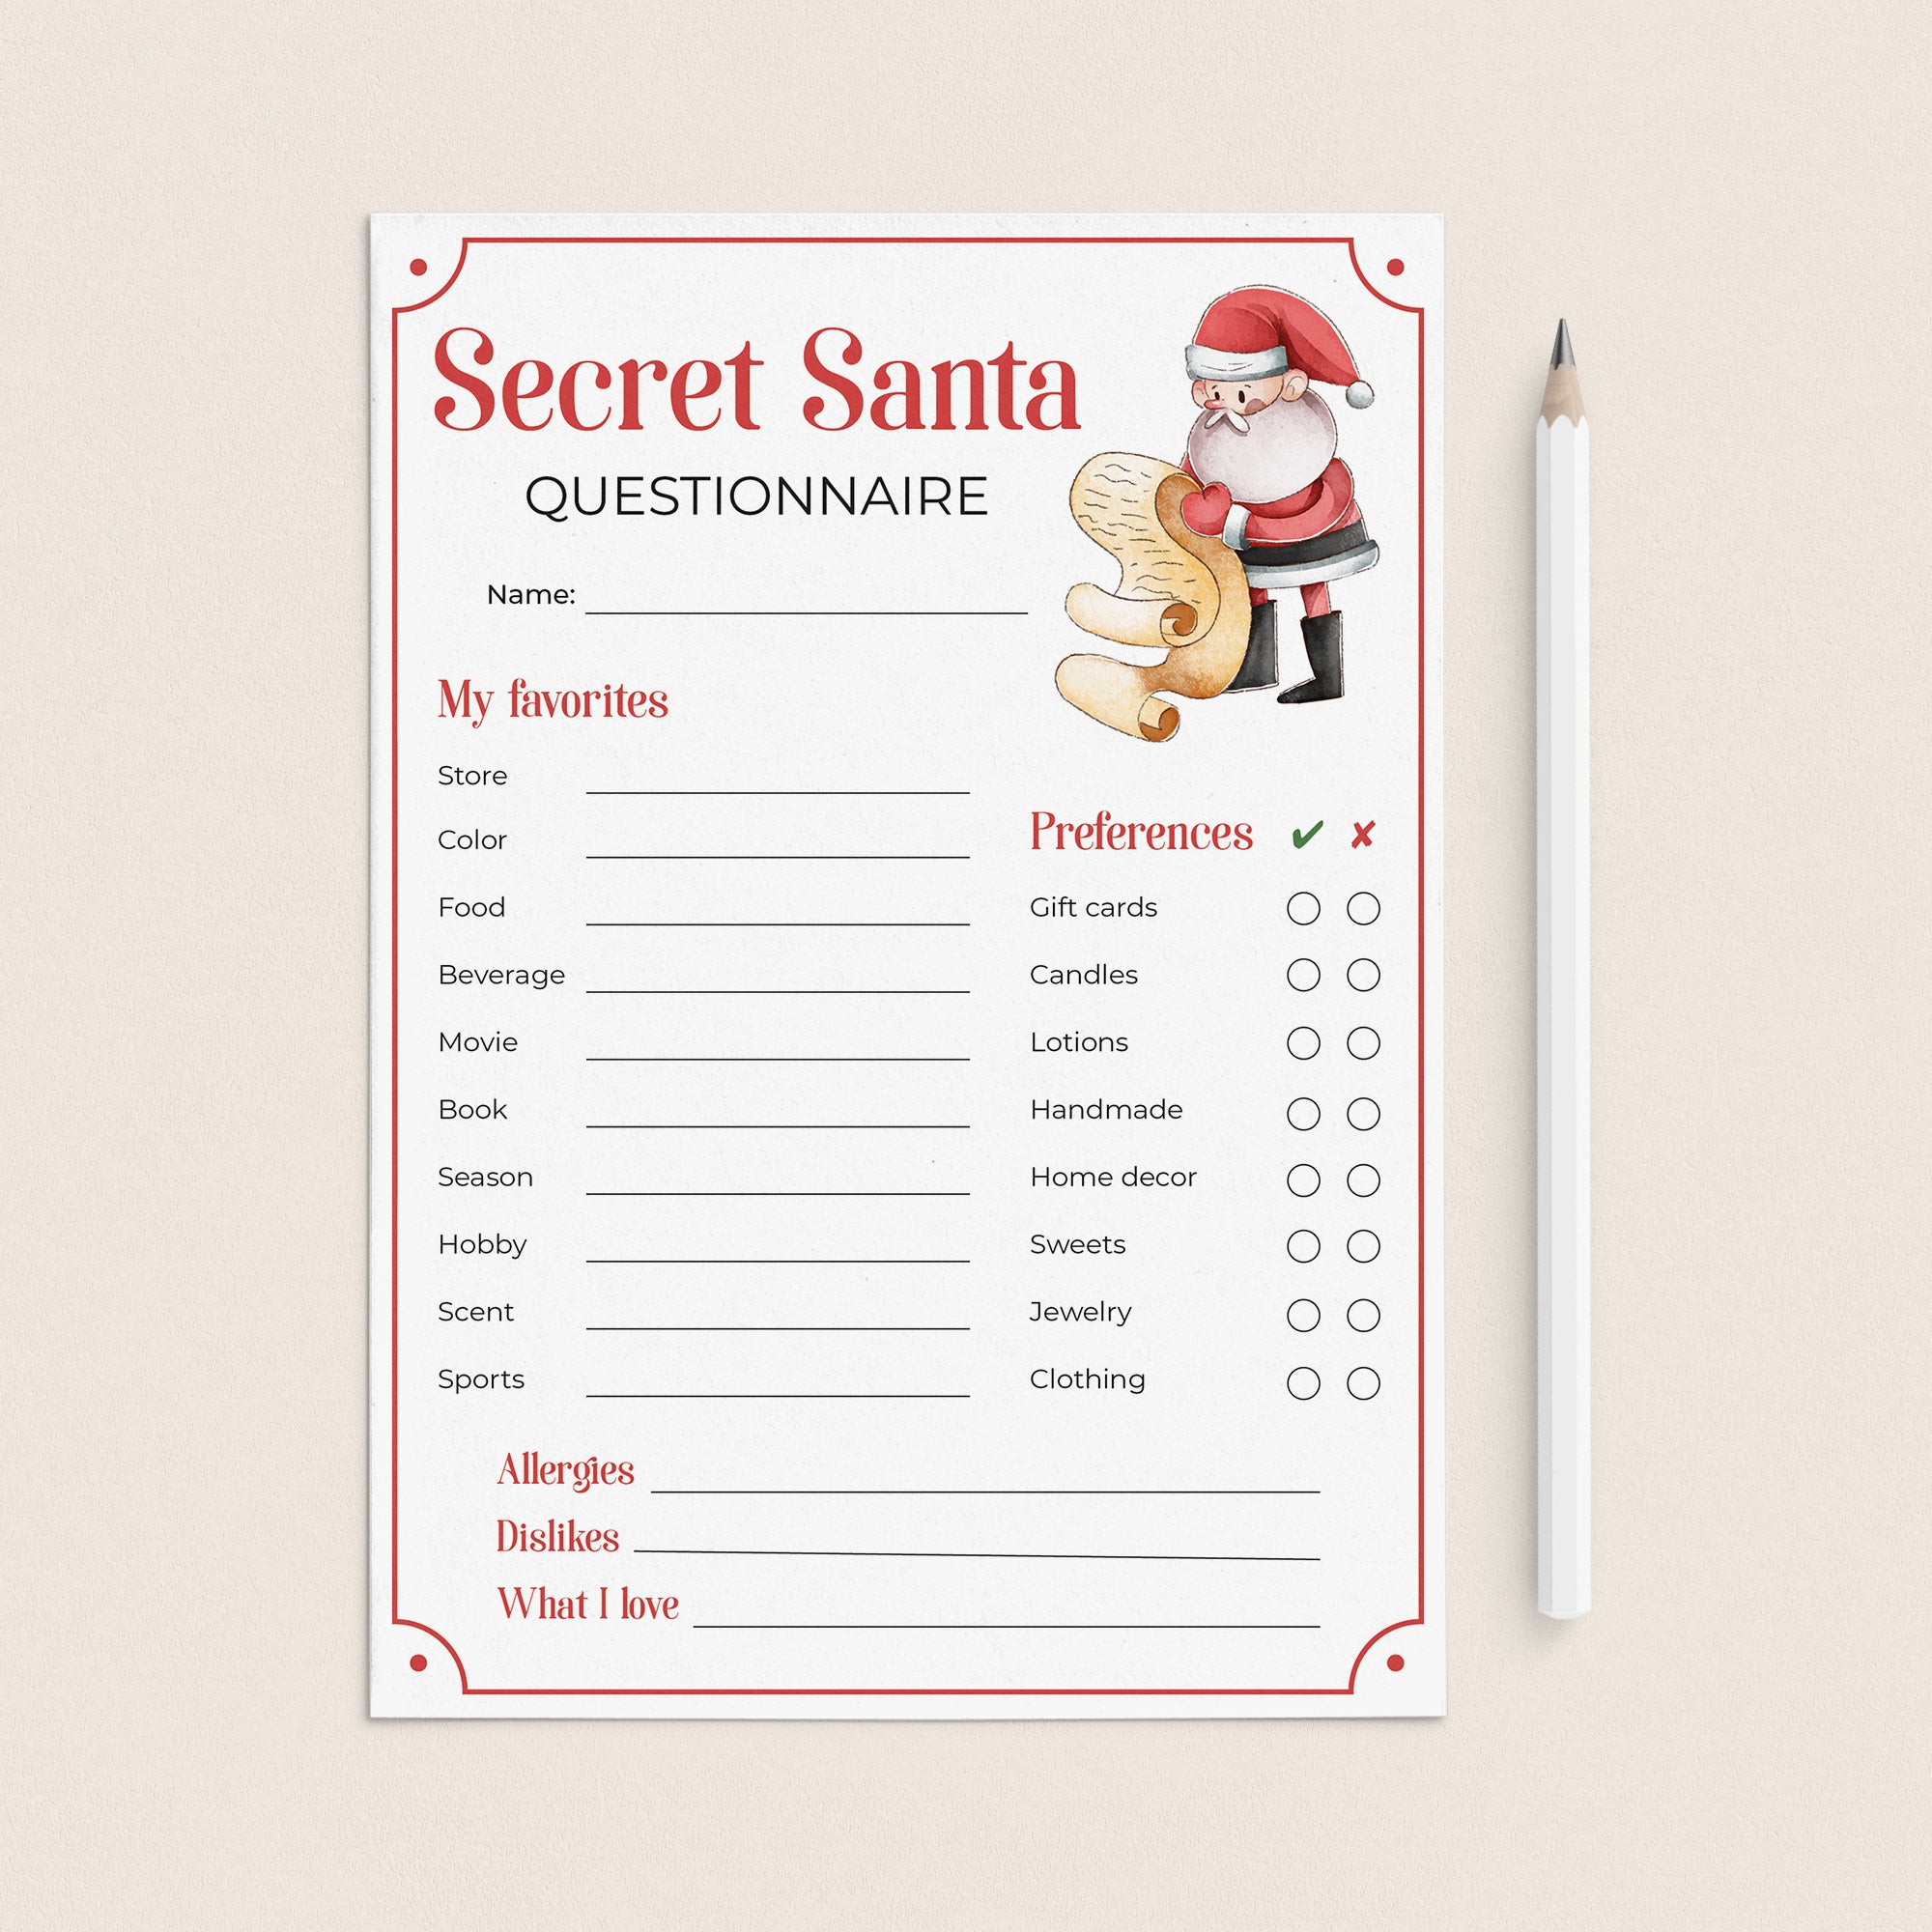 Secret Santa Questionnaire for Gift Exchange Printable LittleSizzle